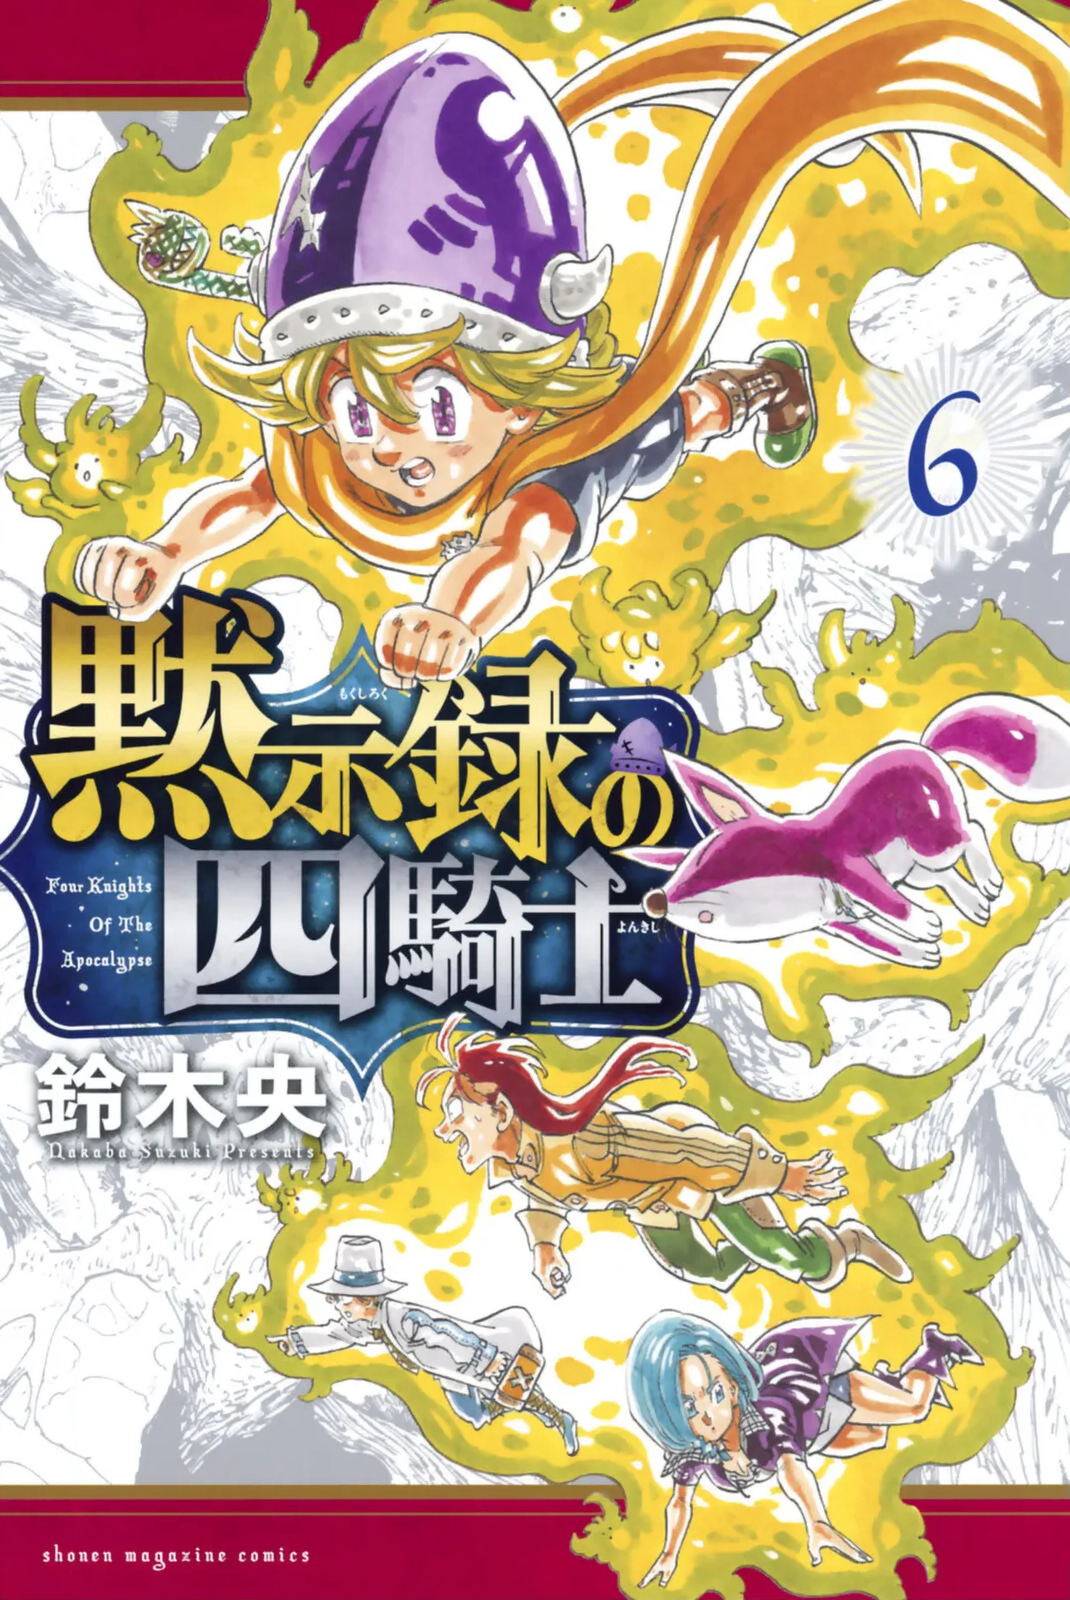 Manga Volume 6, Knight's & Magic Wiki